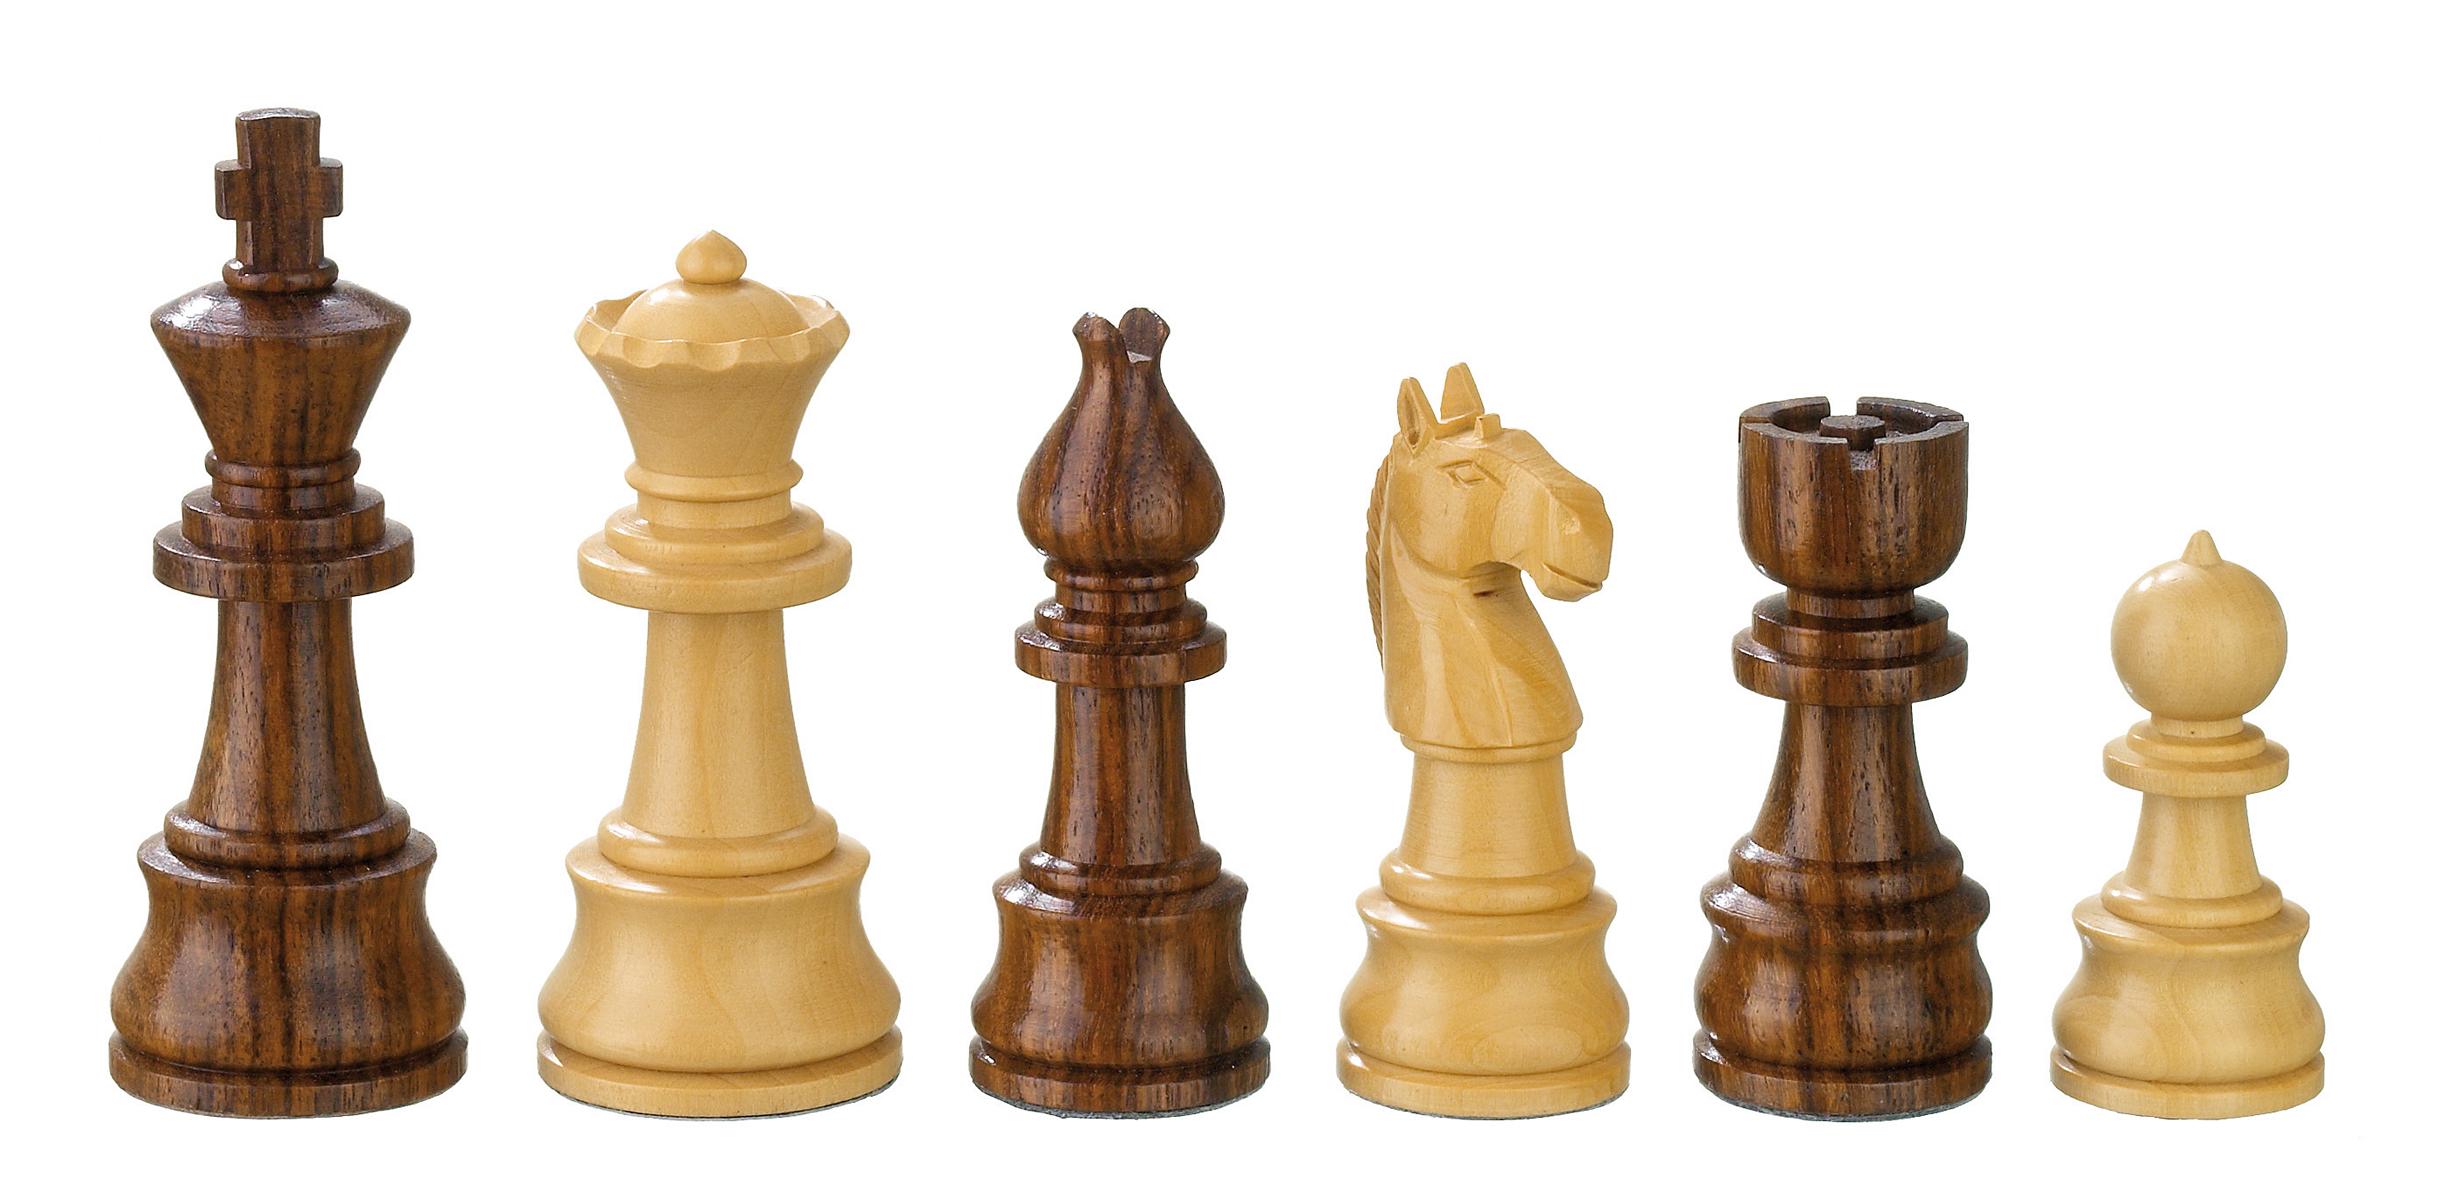 Schachfiguren Theoderich, Königshöhe 95 mm, in Set-Up Box